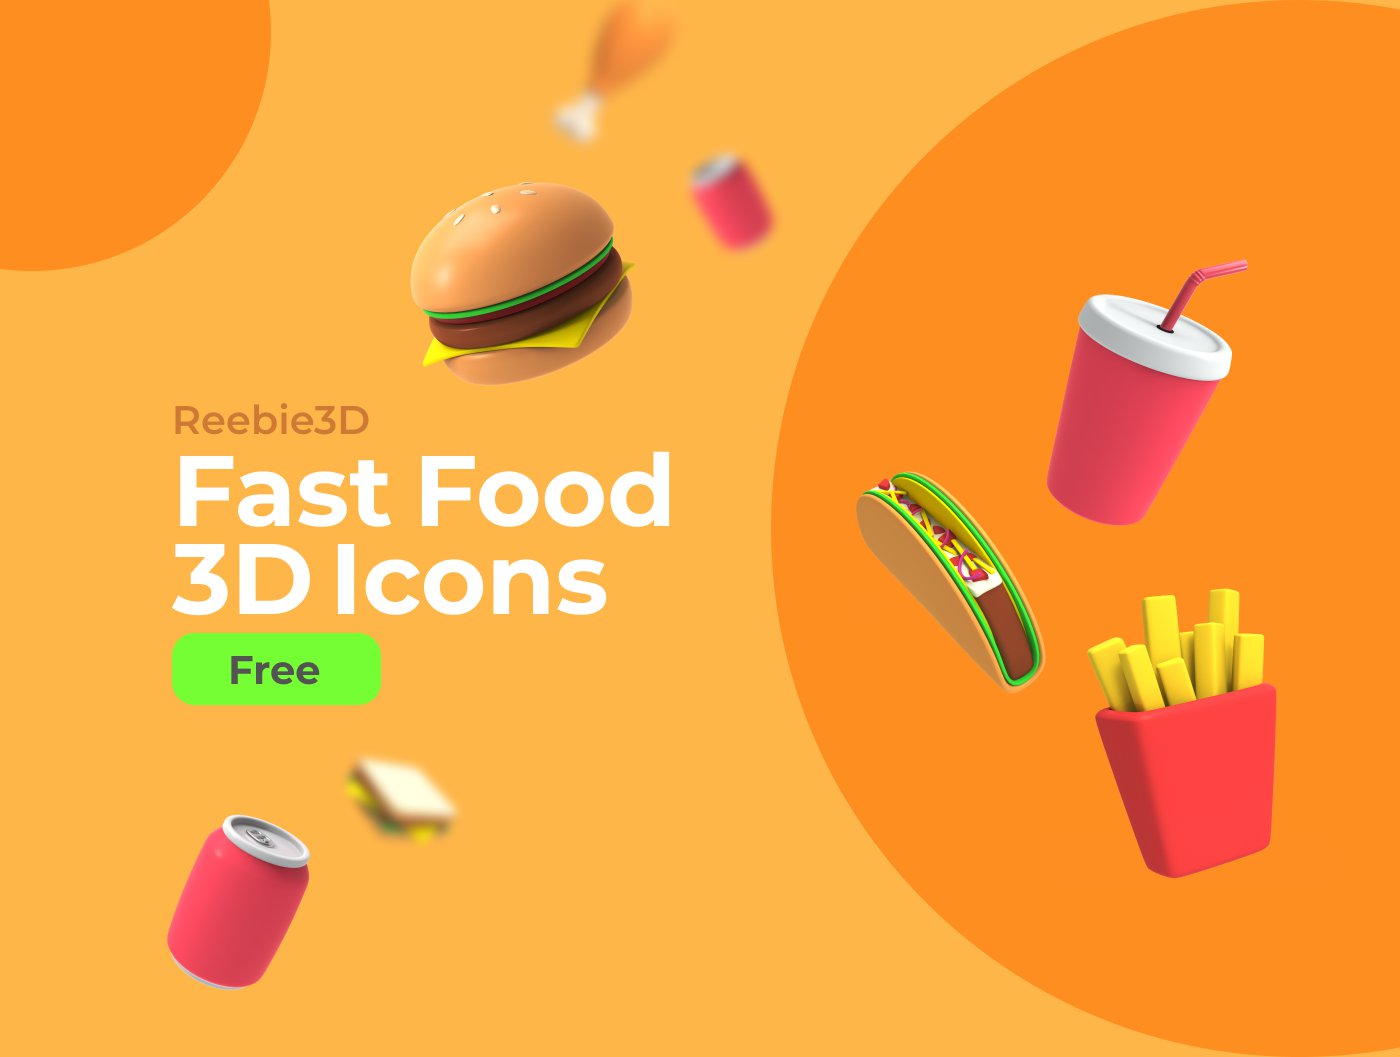 FREE Reebie3D Fast Food 3D Icons